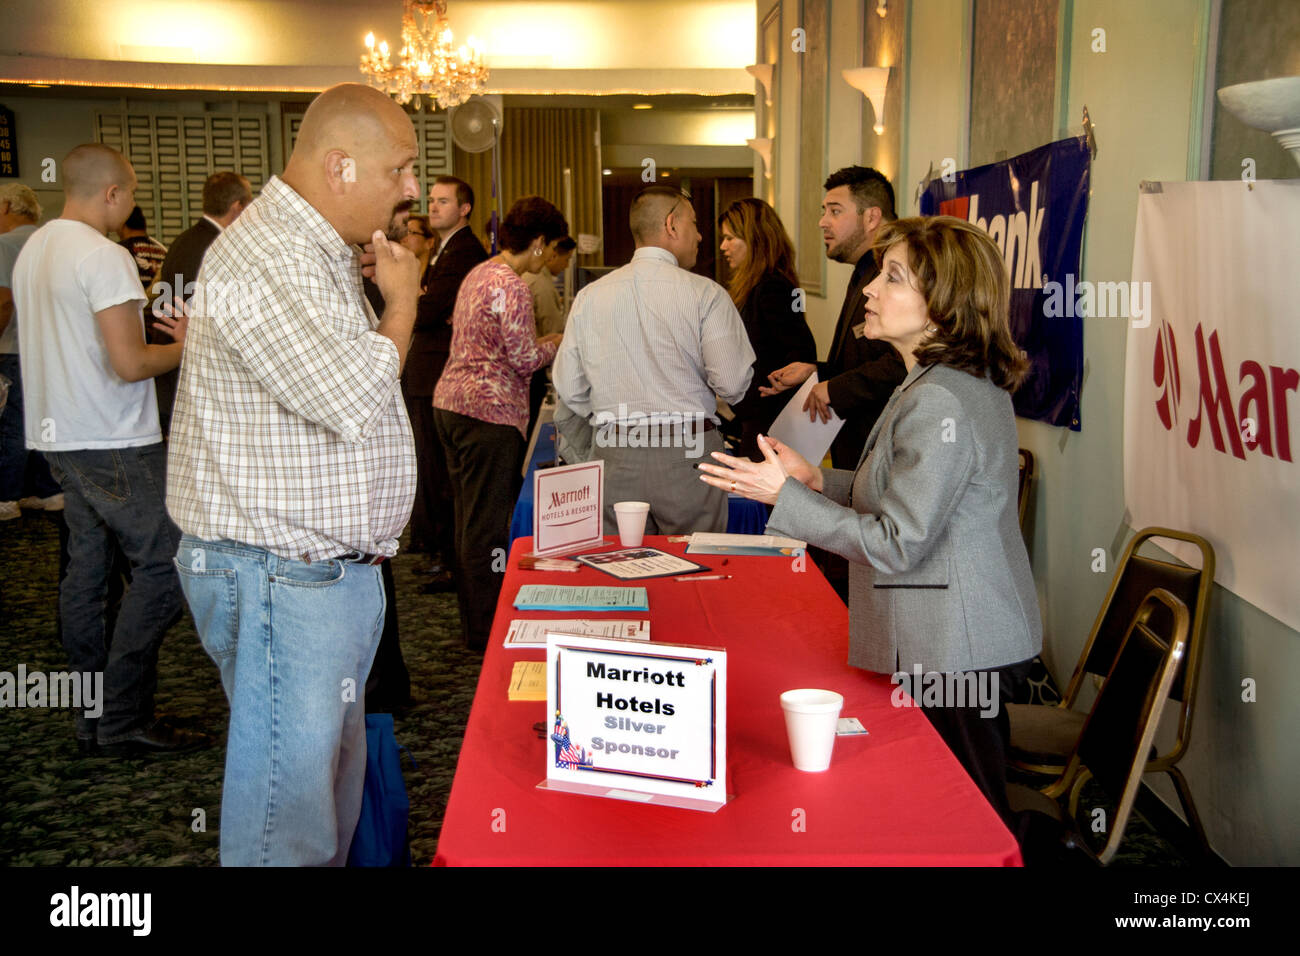 A skeptical Hispanic man considers hotel employment at a job fair for military veterans in Santa Ana, CA. Stock Photo